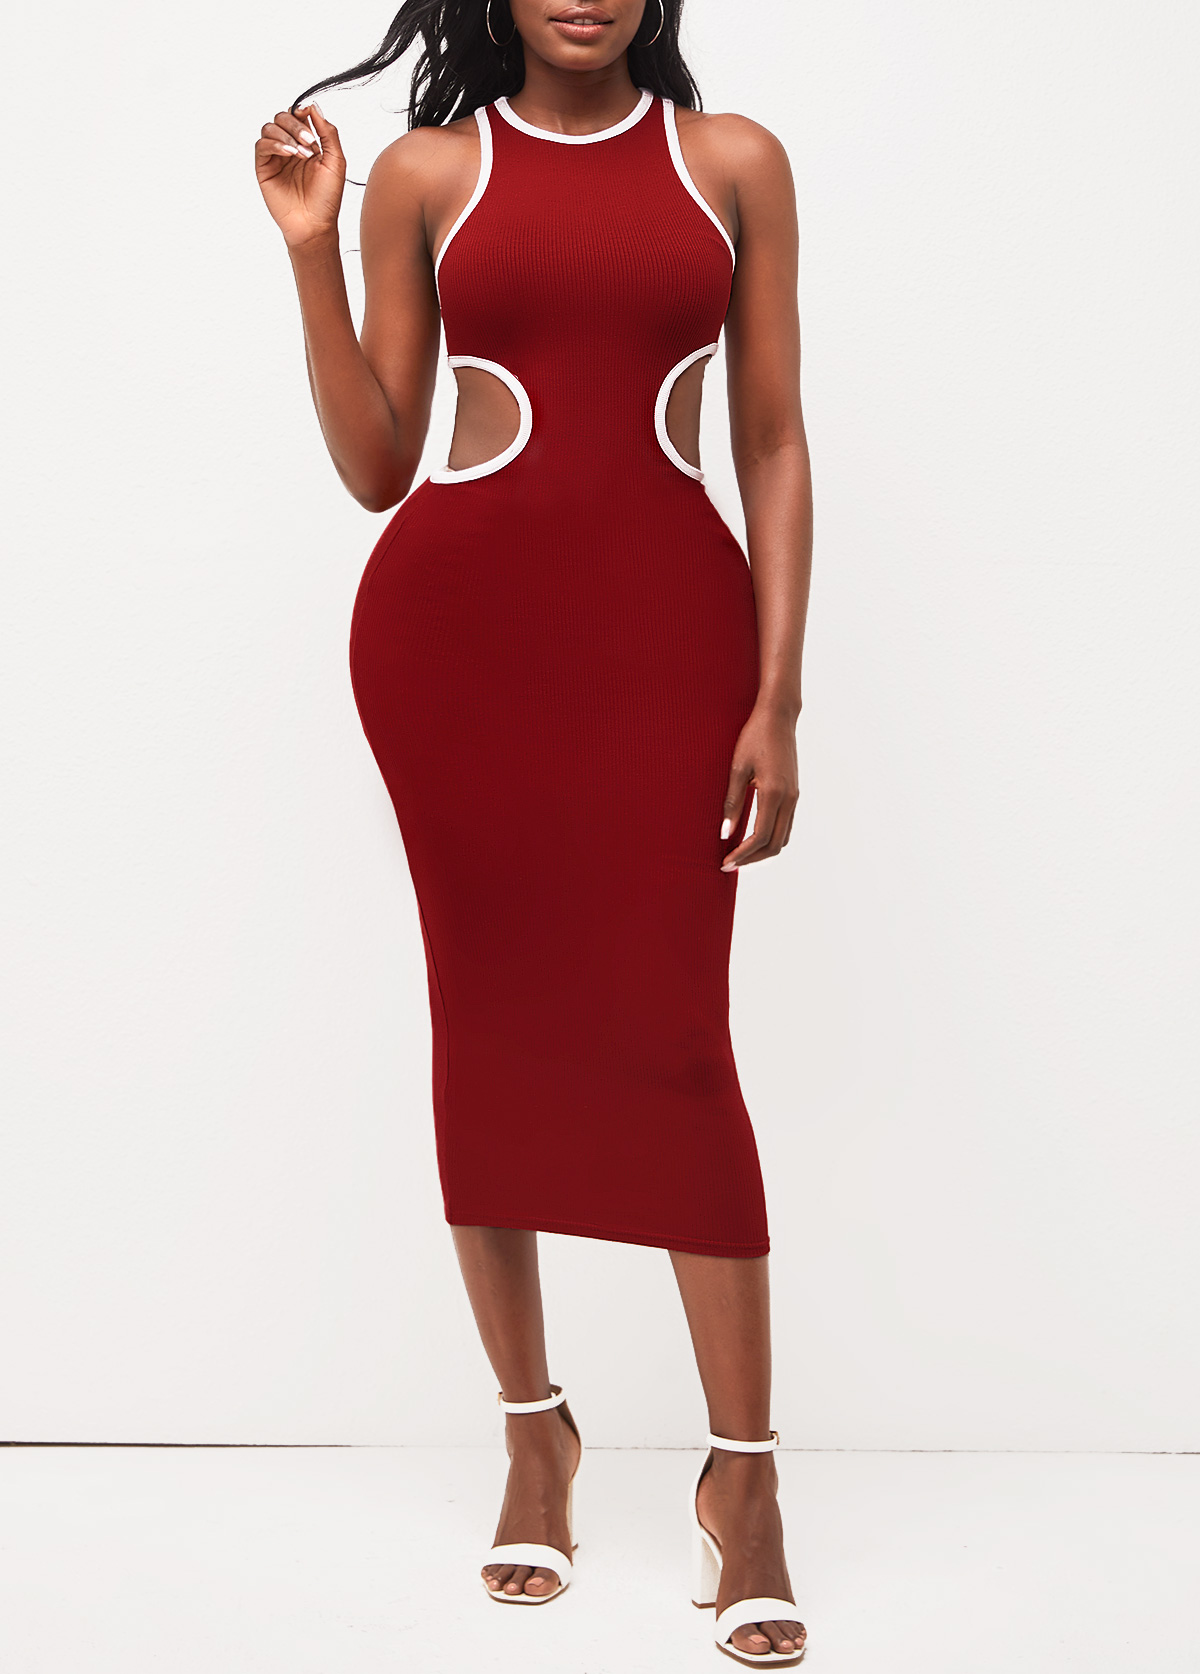 Cutout Wine Red Round Neck Sleeveless Dress